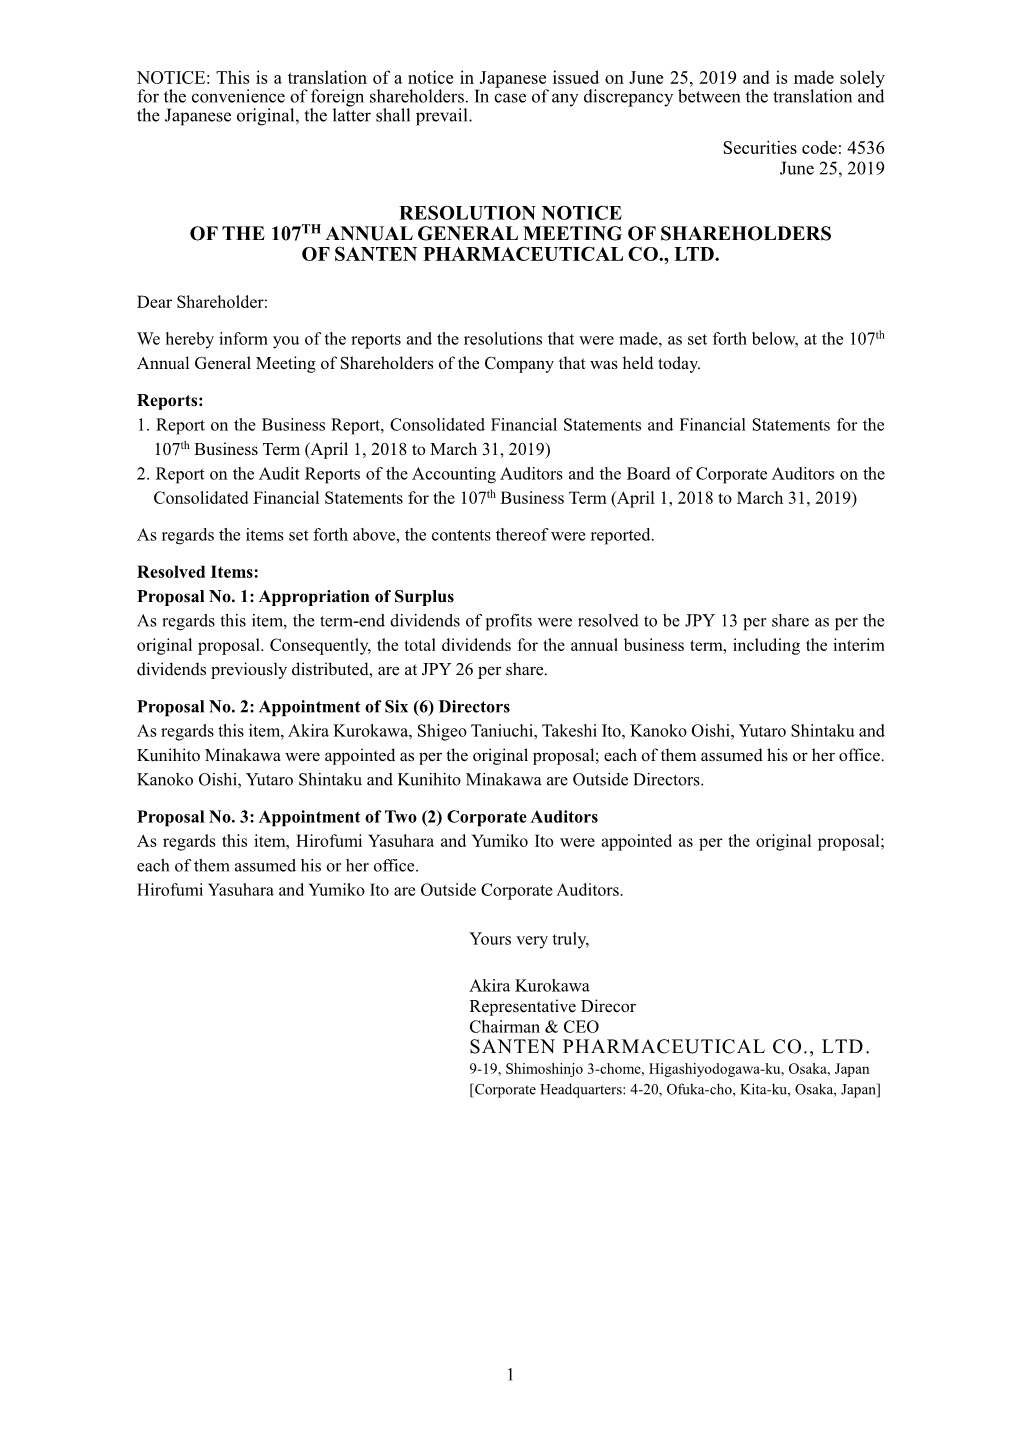 Resolution Notice (PDF: 230KB)